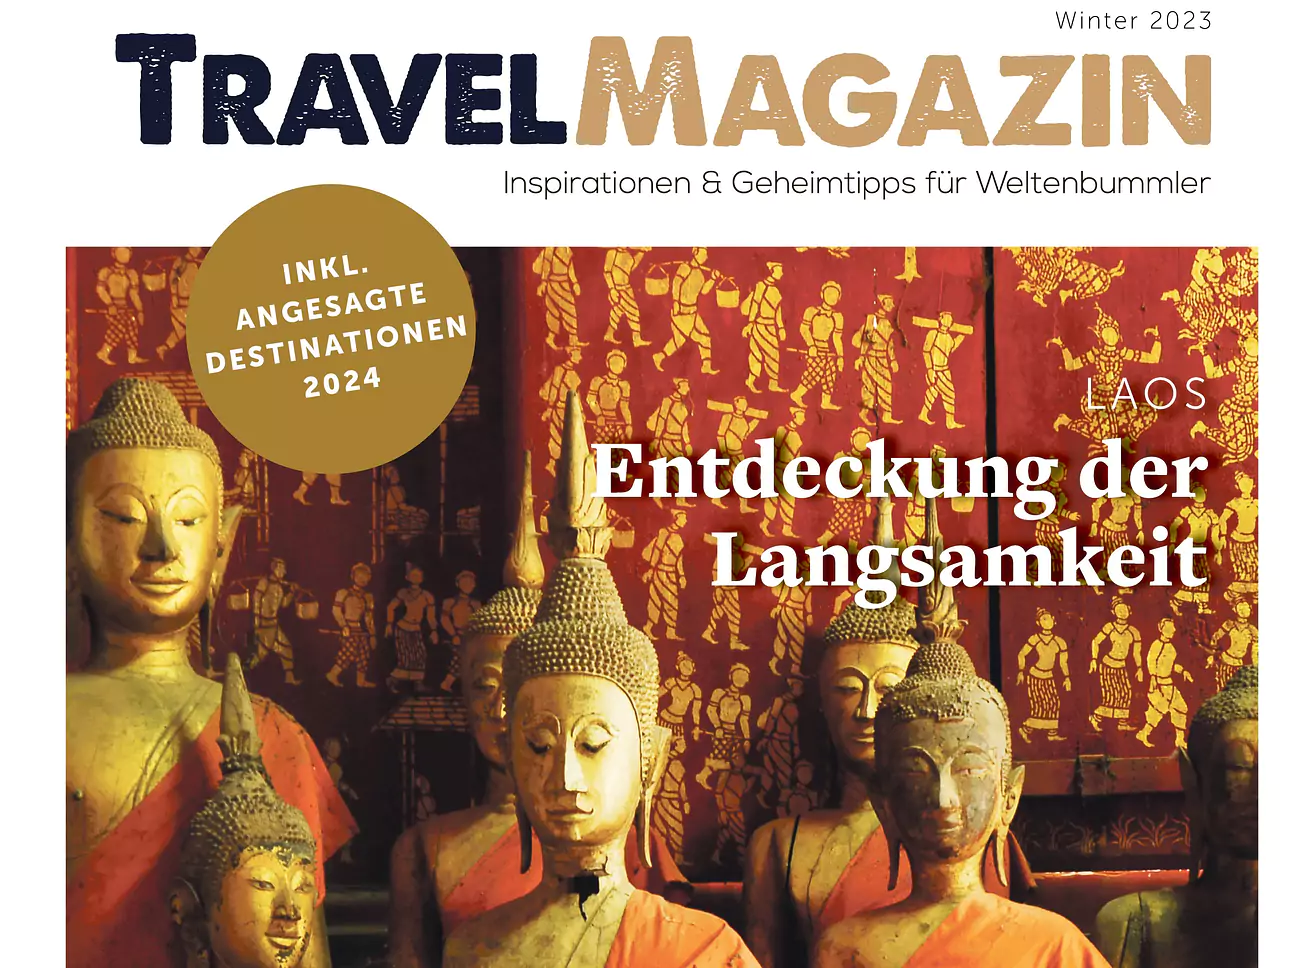 Travel Magazin